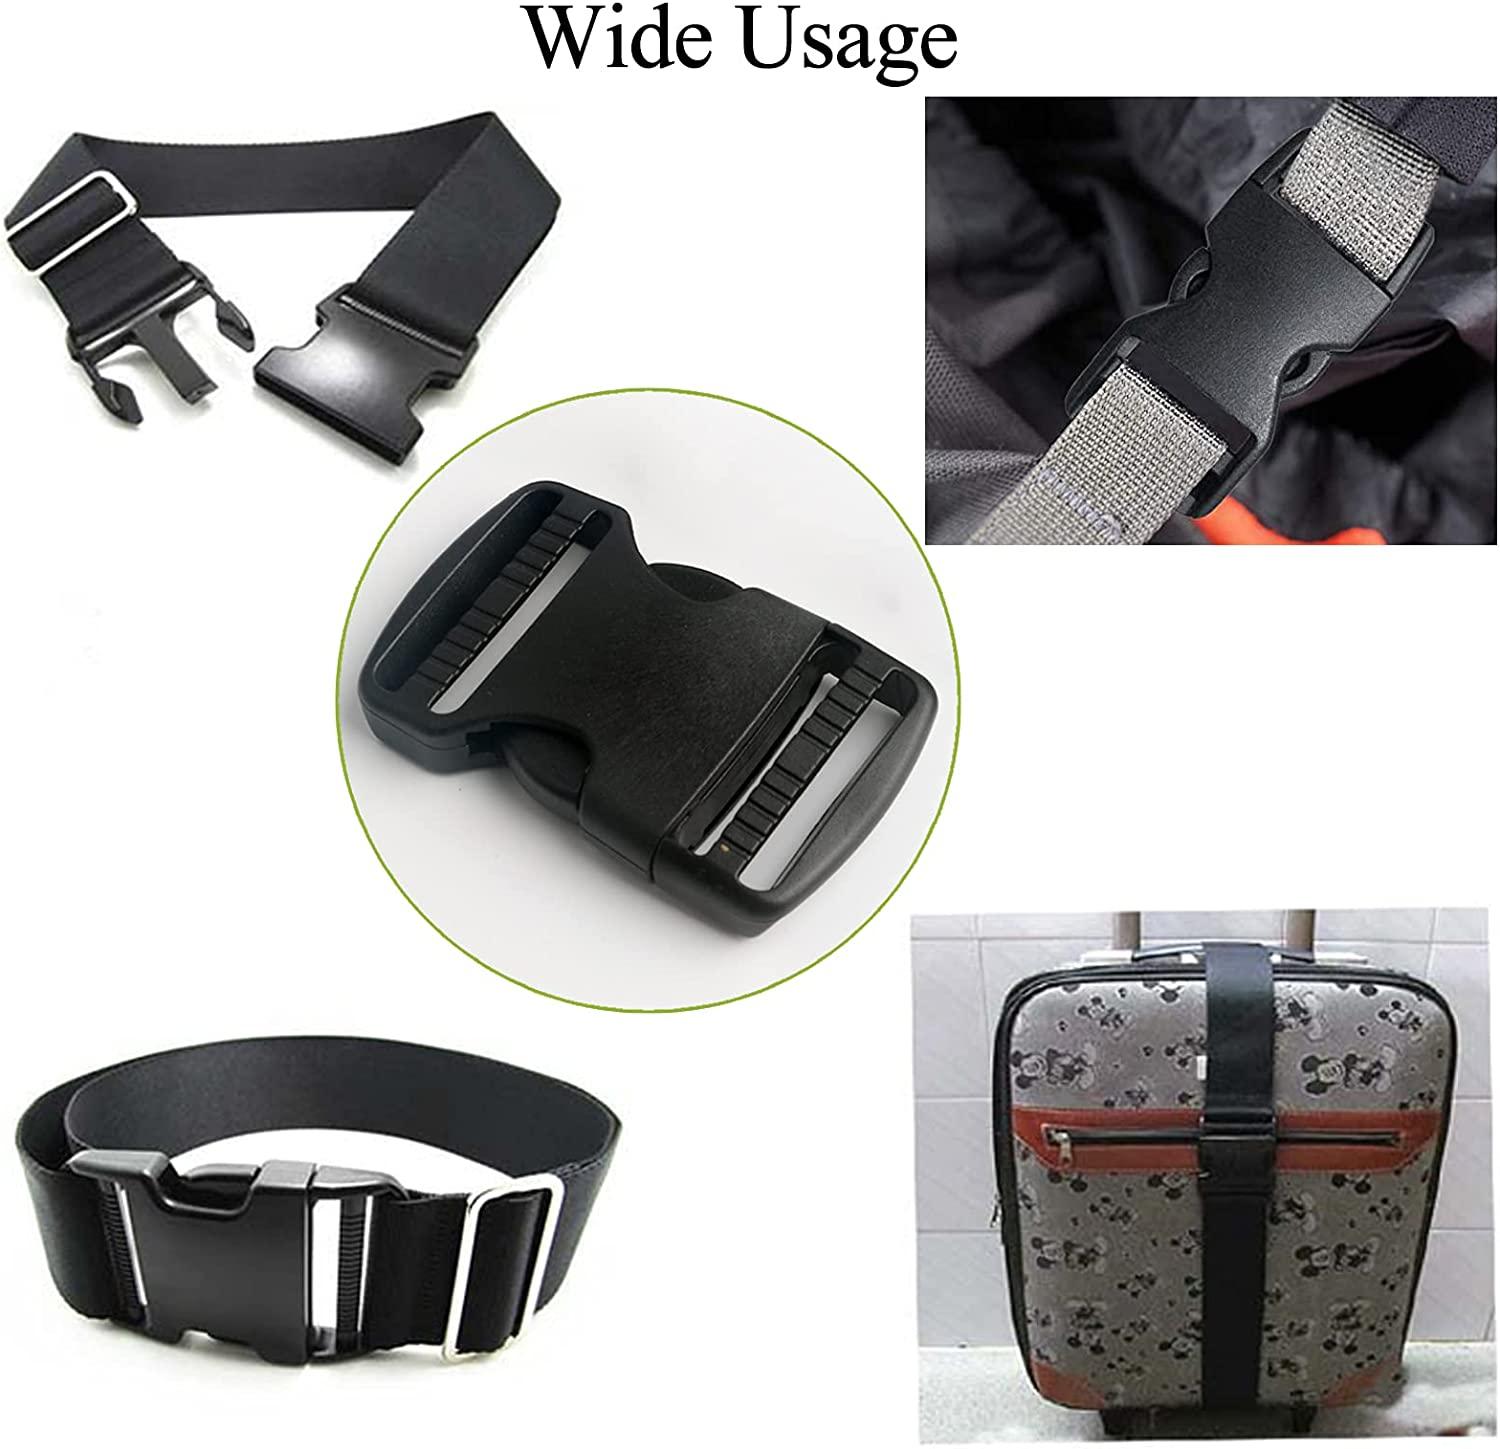 plastic side release buckles backpack straps